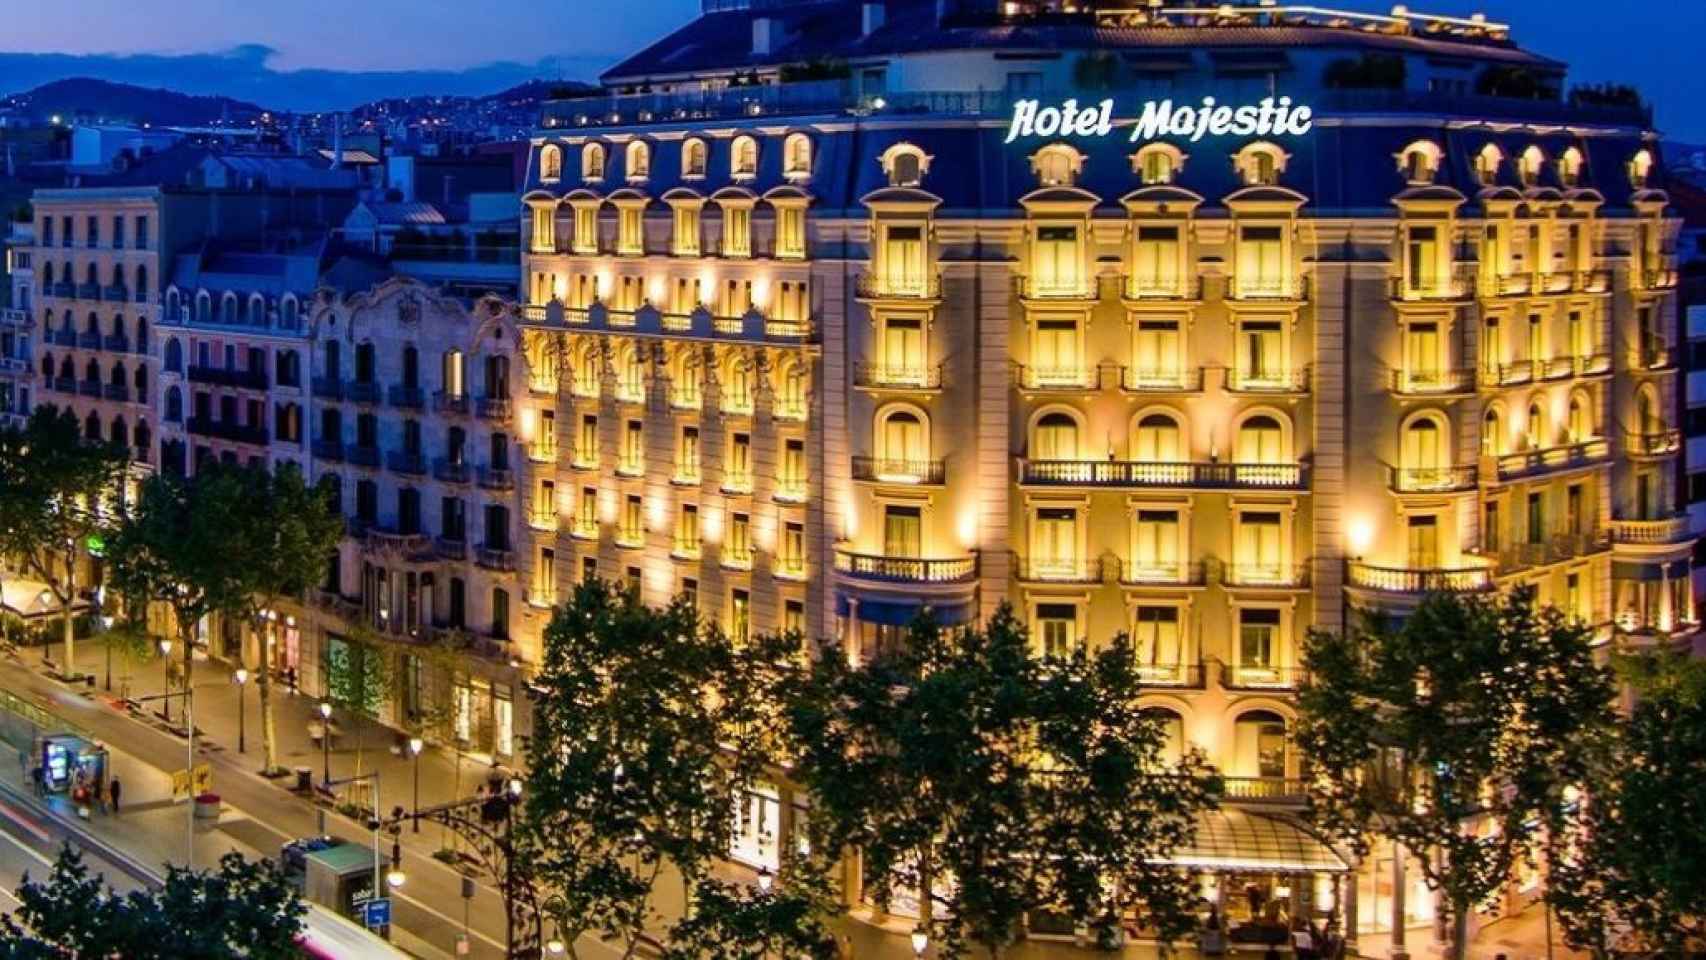 Hotel Majestic, propiedad de la familia Soldevila / MA